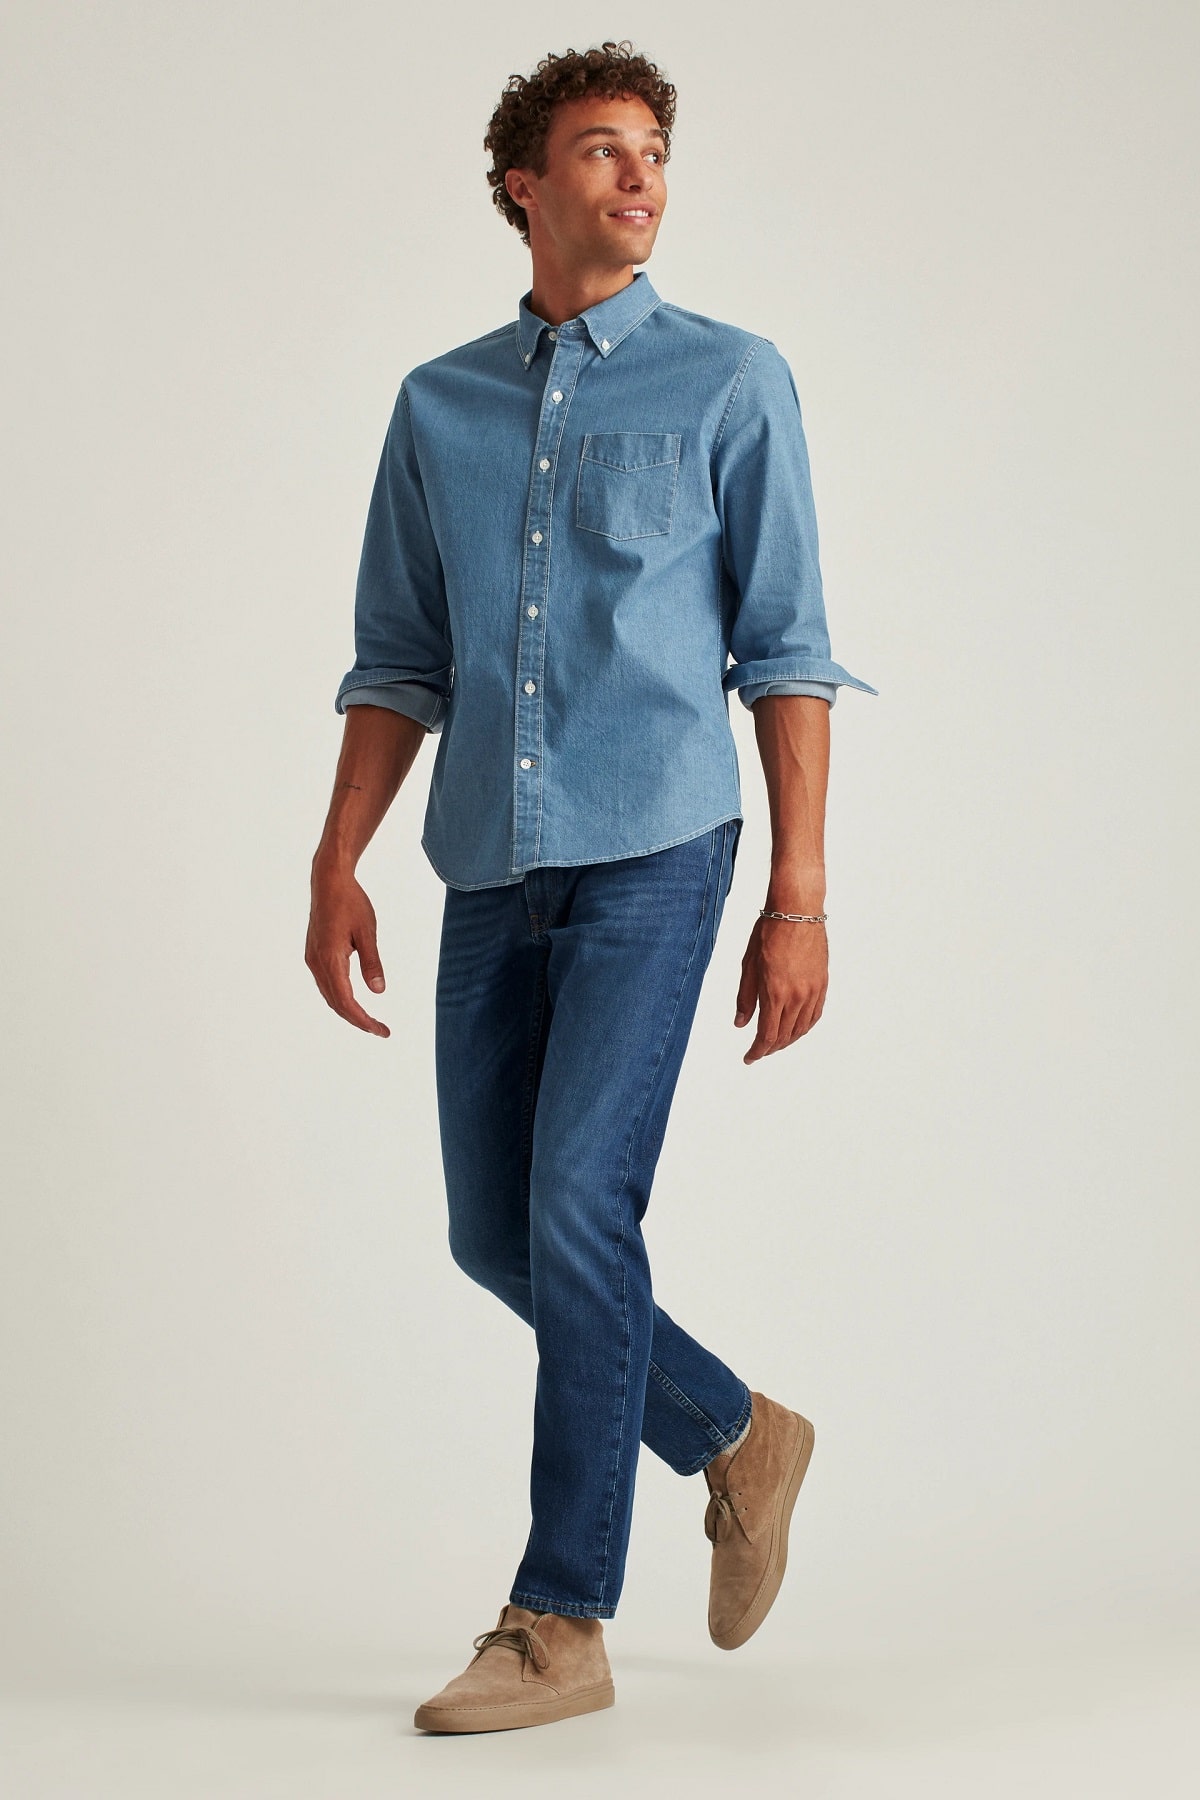 Classic Blue Denim Shirt | Luca Faloni | Blue denim shirt, Denim shirt, Denim  shirt men